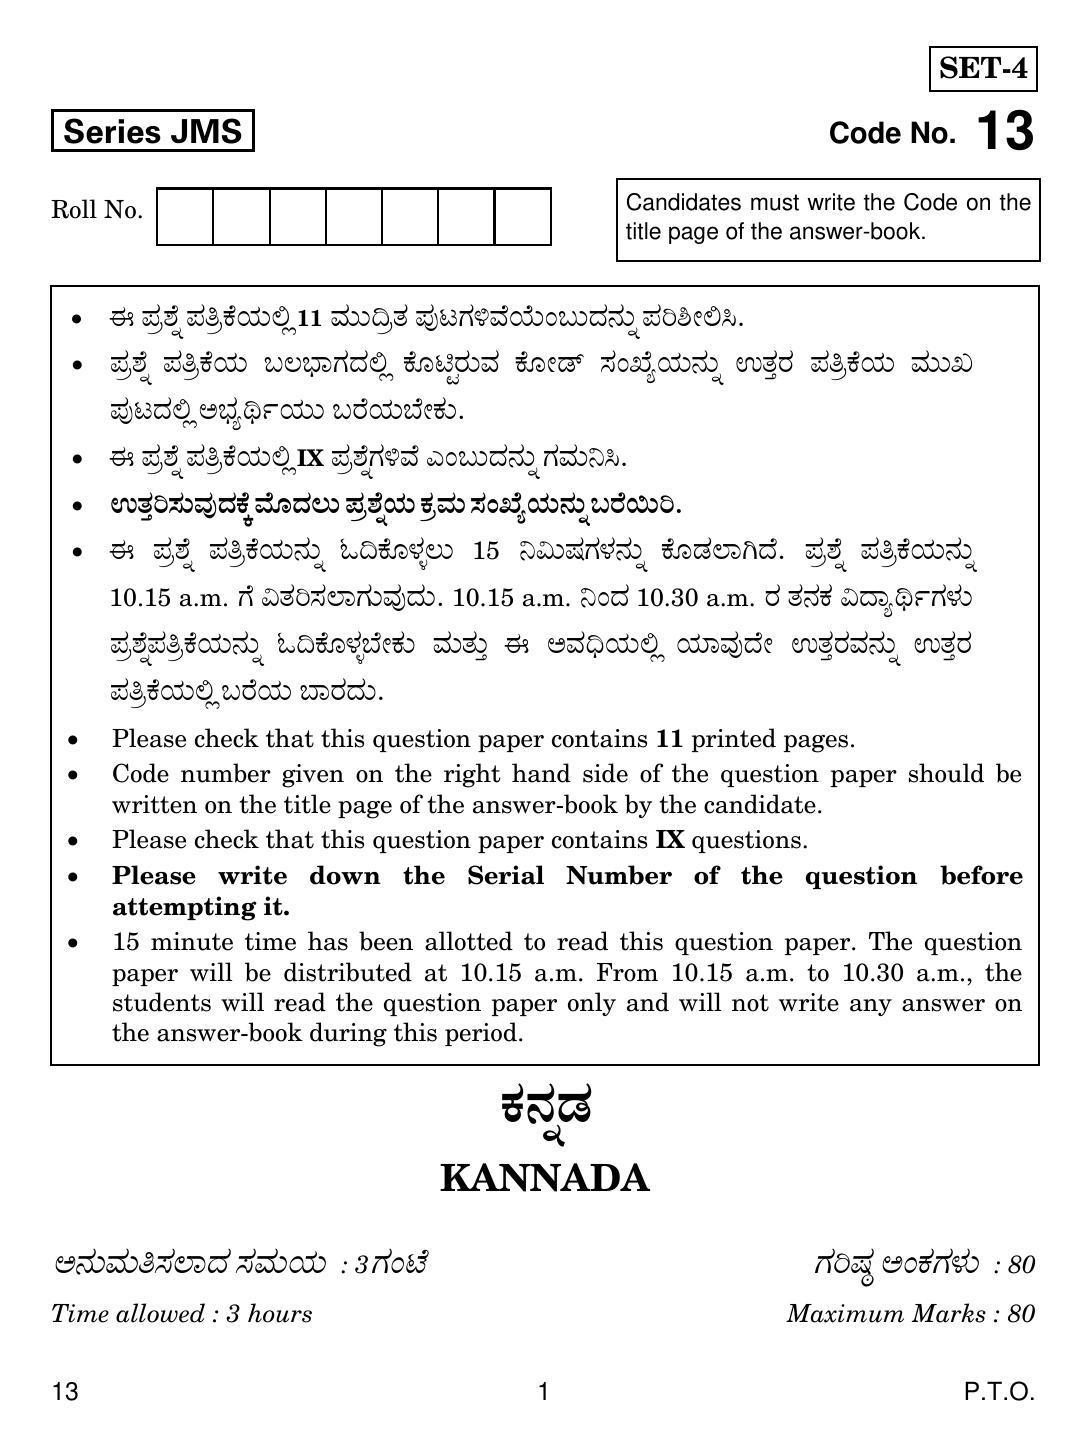 CBSE Class 10 13 Kannada 2019 Question Paper - Page 1